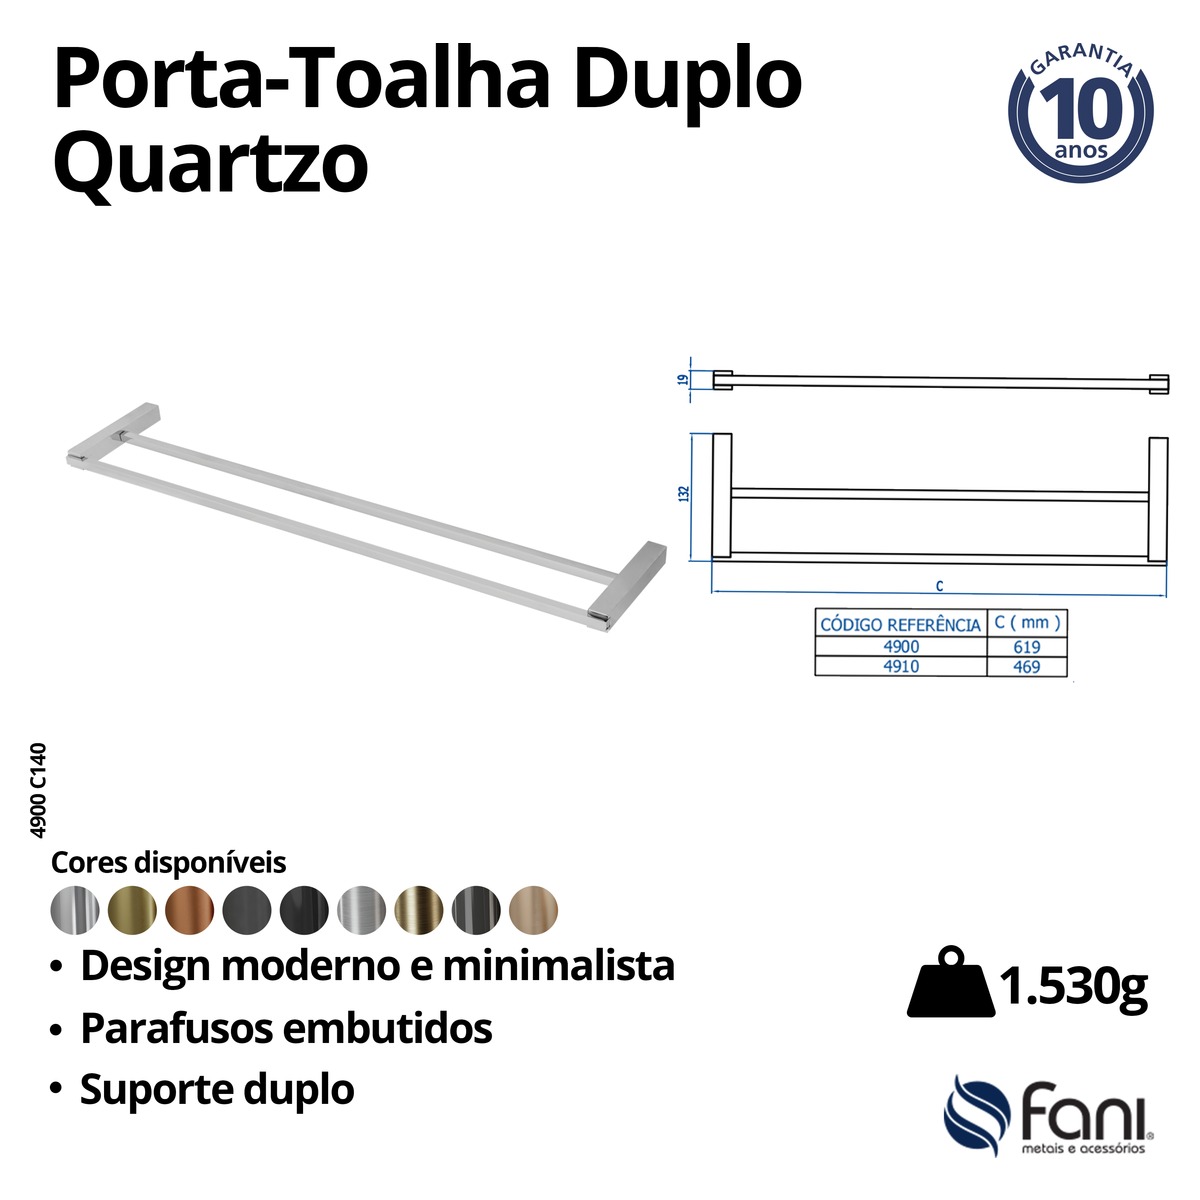 Porta Toalha Reto Longo 61,9cm Duplo Quartzo 4900DV140 D'oro Vecchio Fani